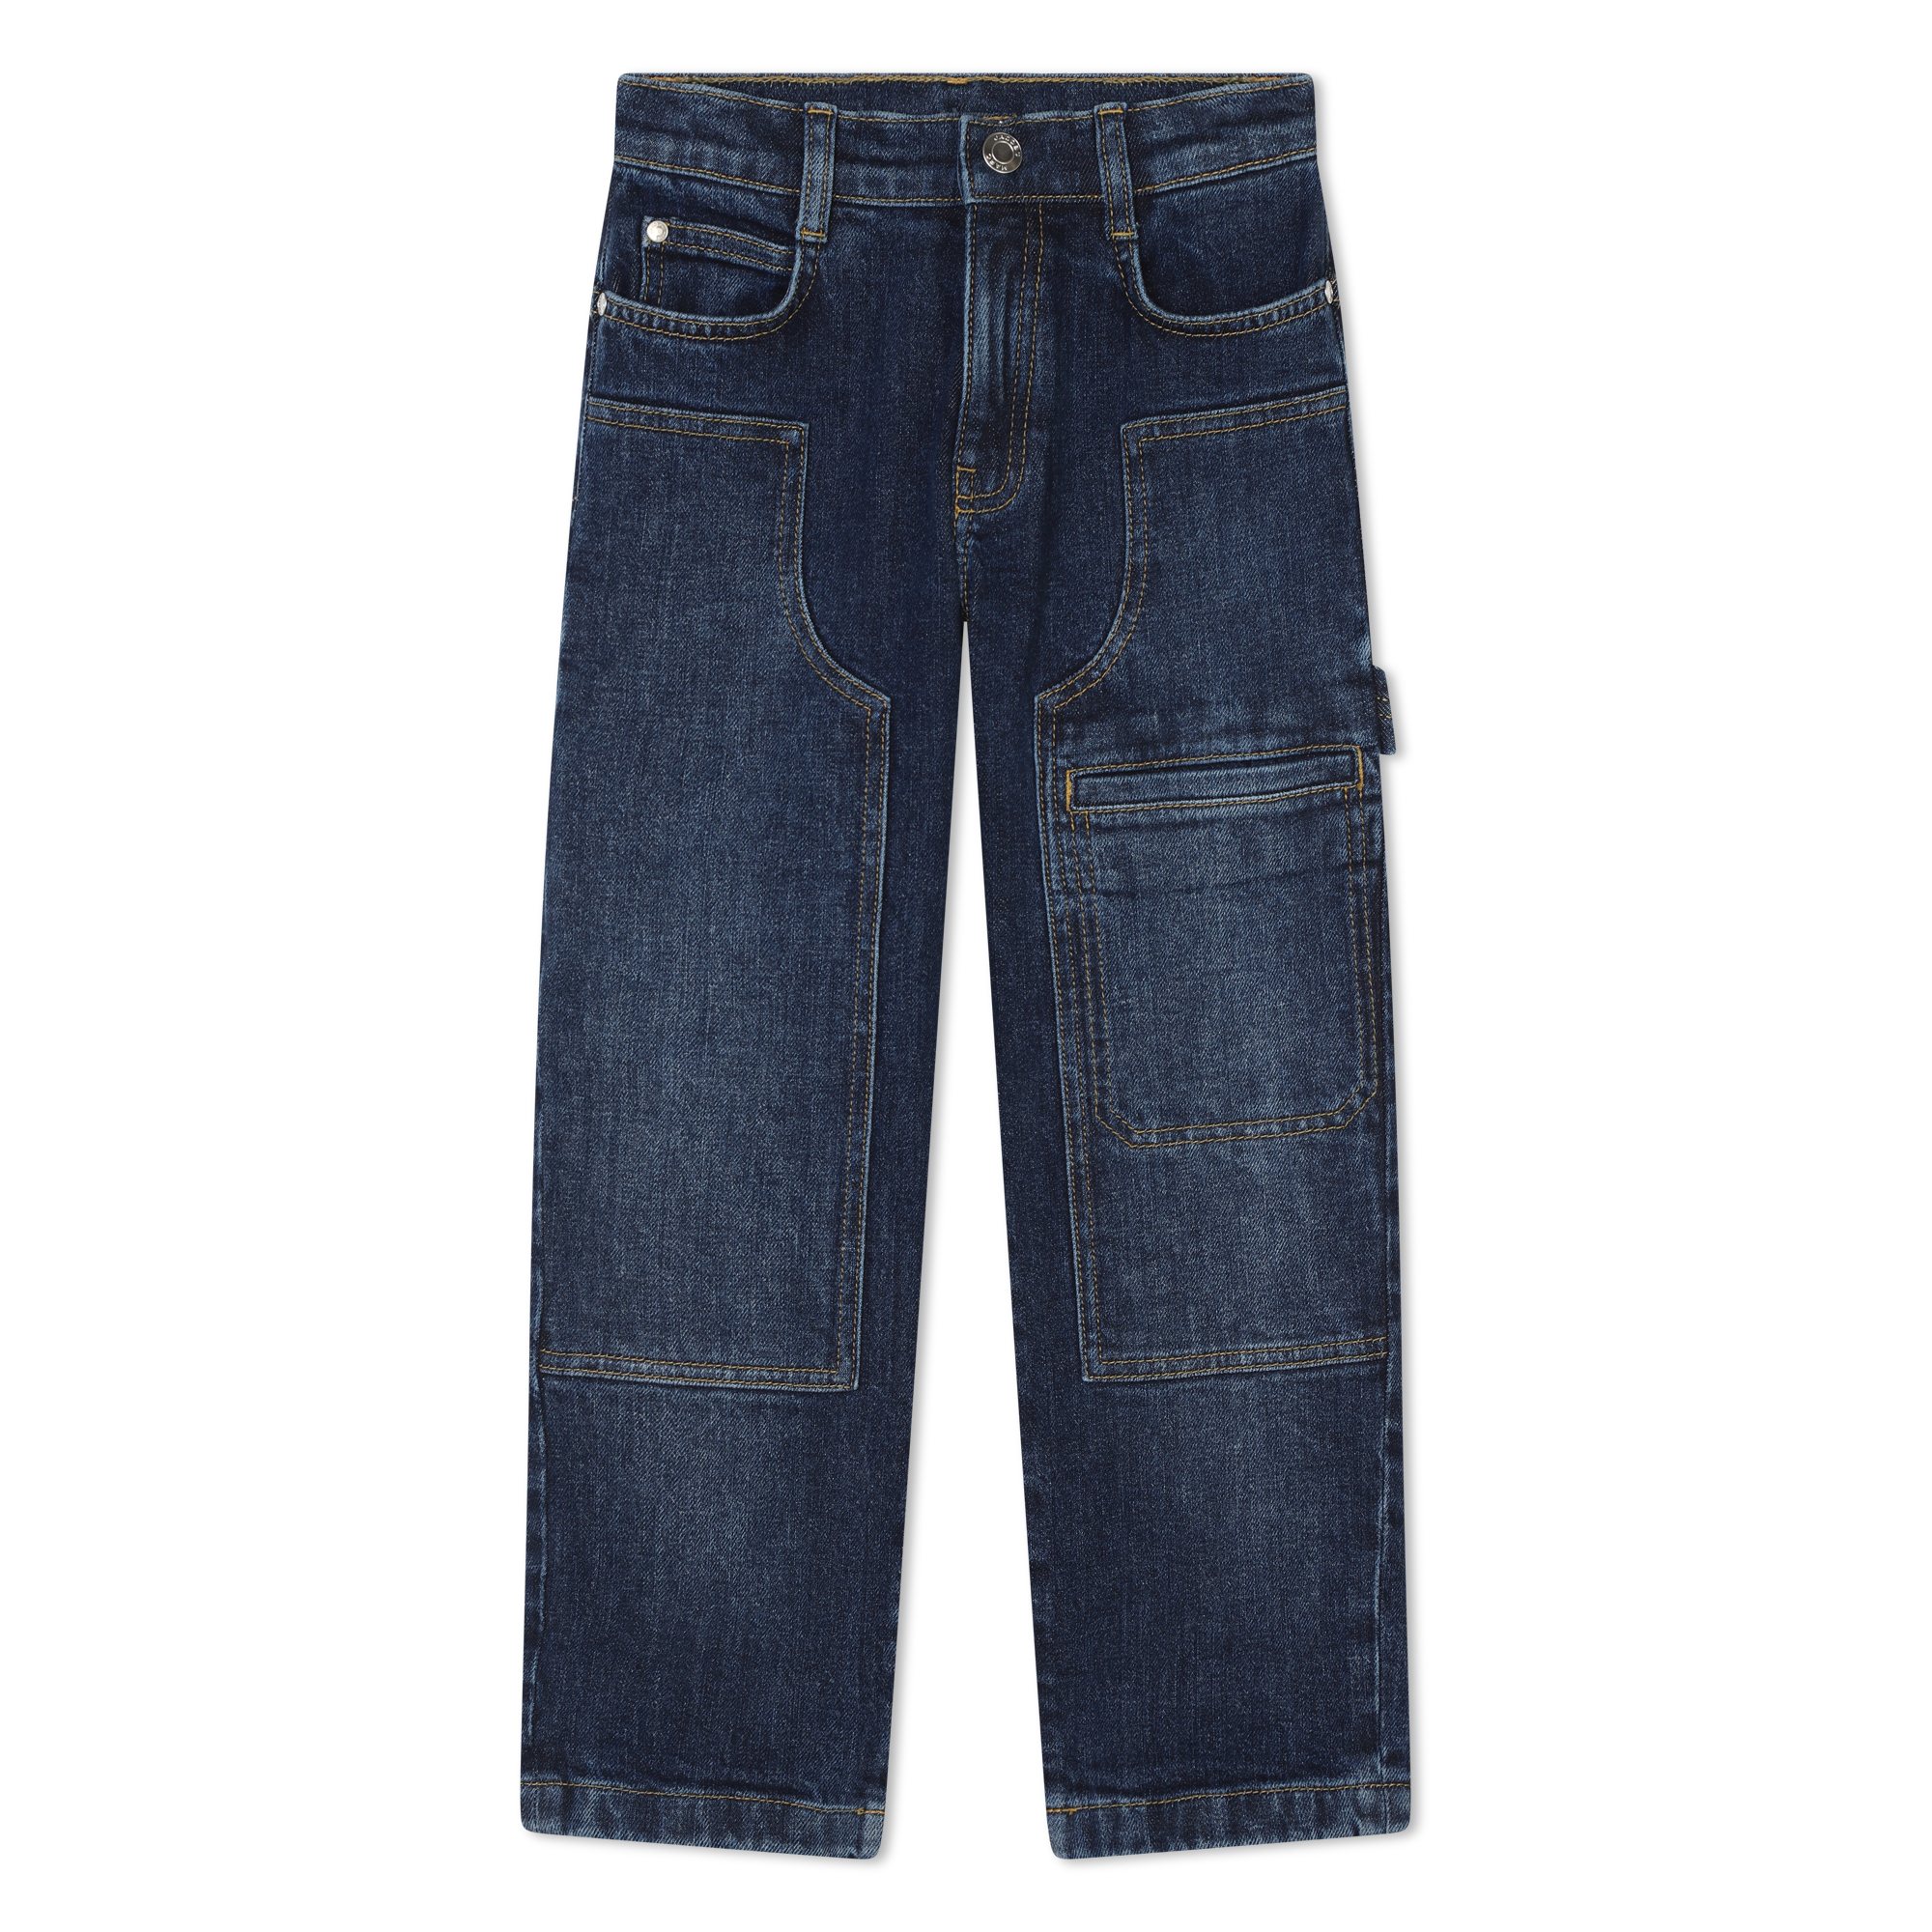 Cotton jeans MARC JACOBS for BOY